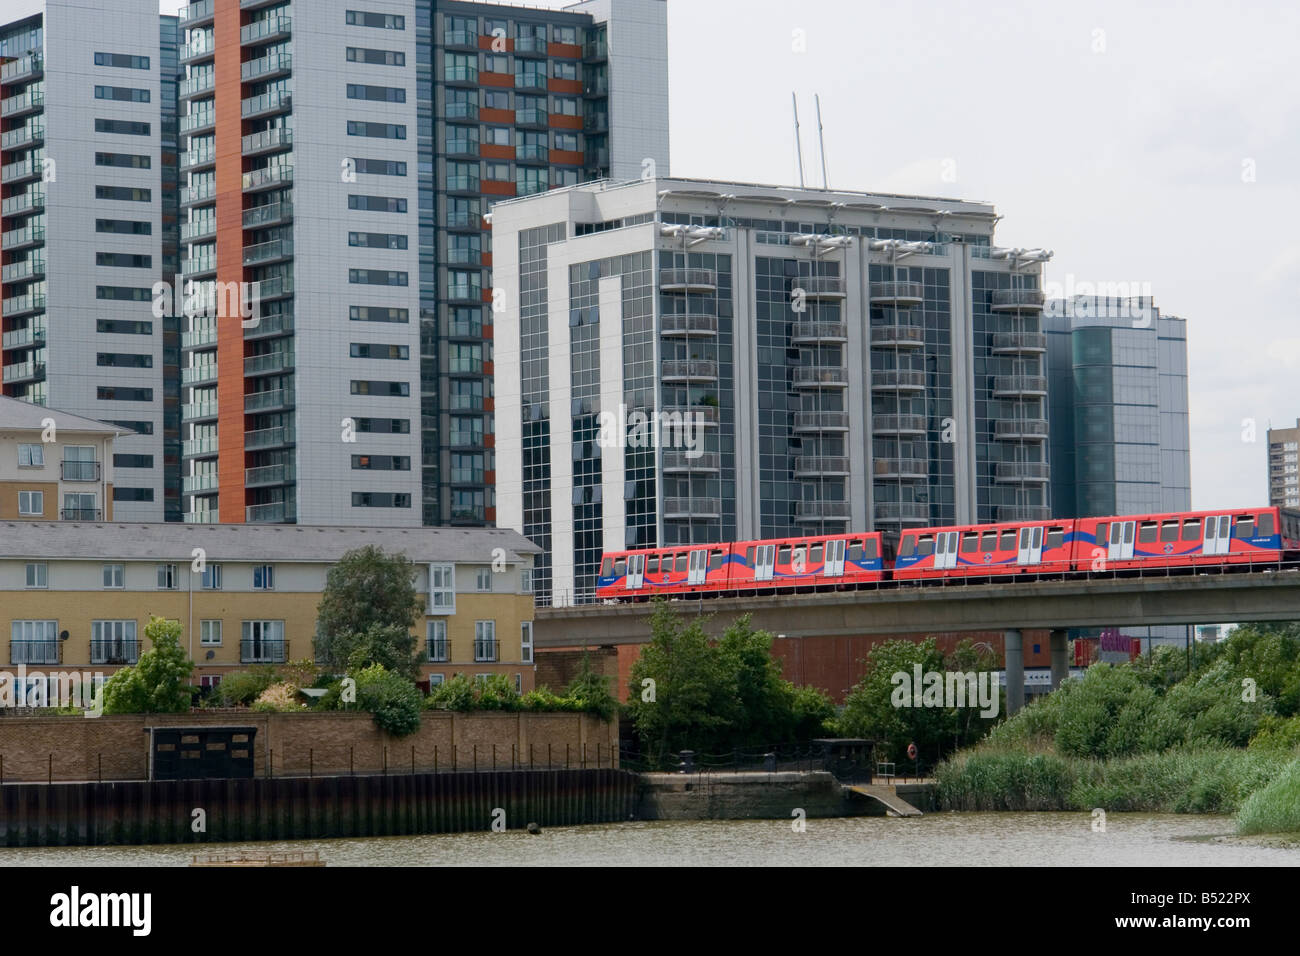 Blackwall east London with a DLR - Docklands Light Railway train Stock Photo